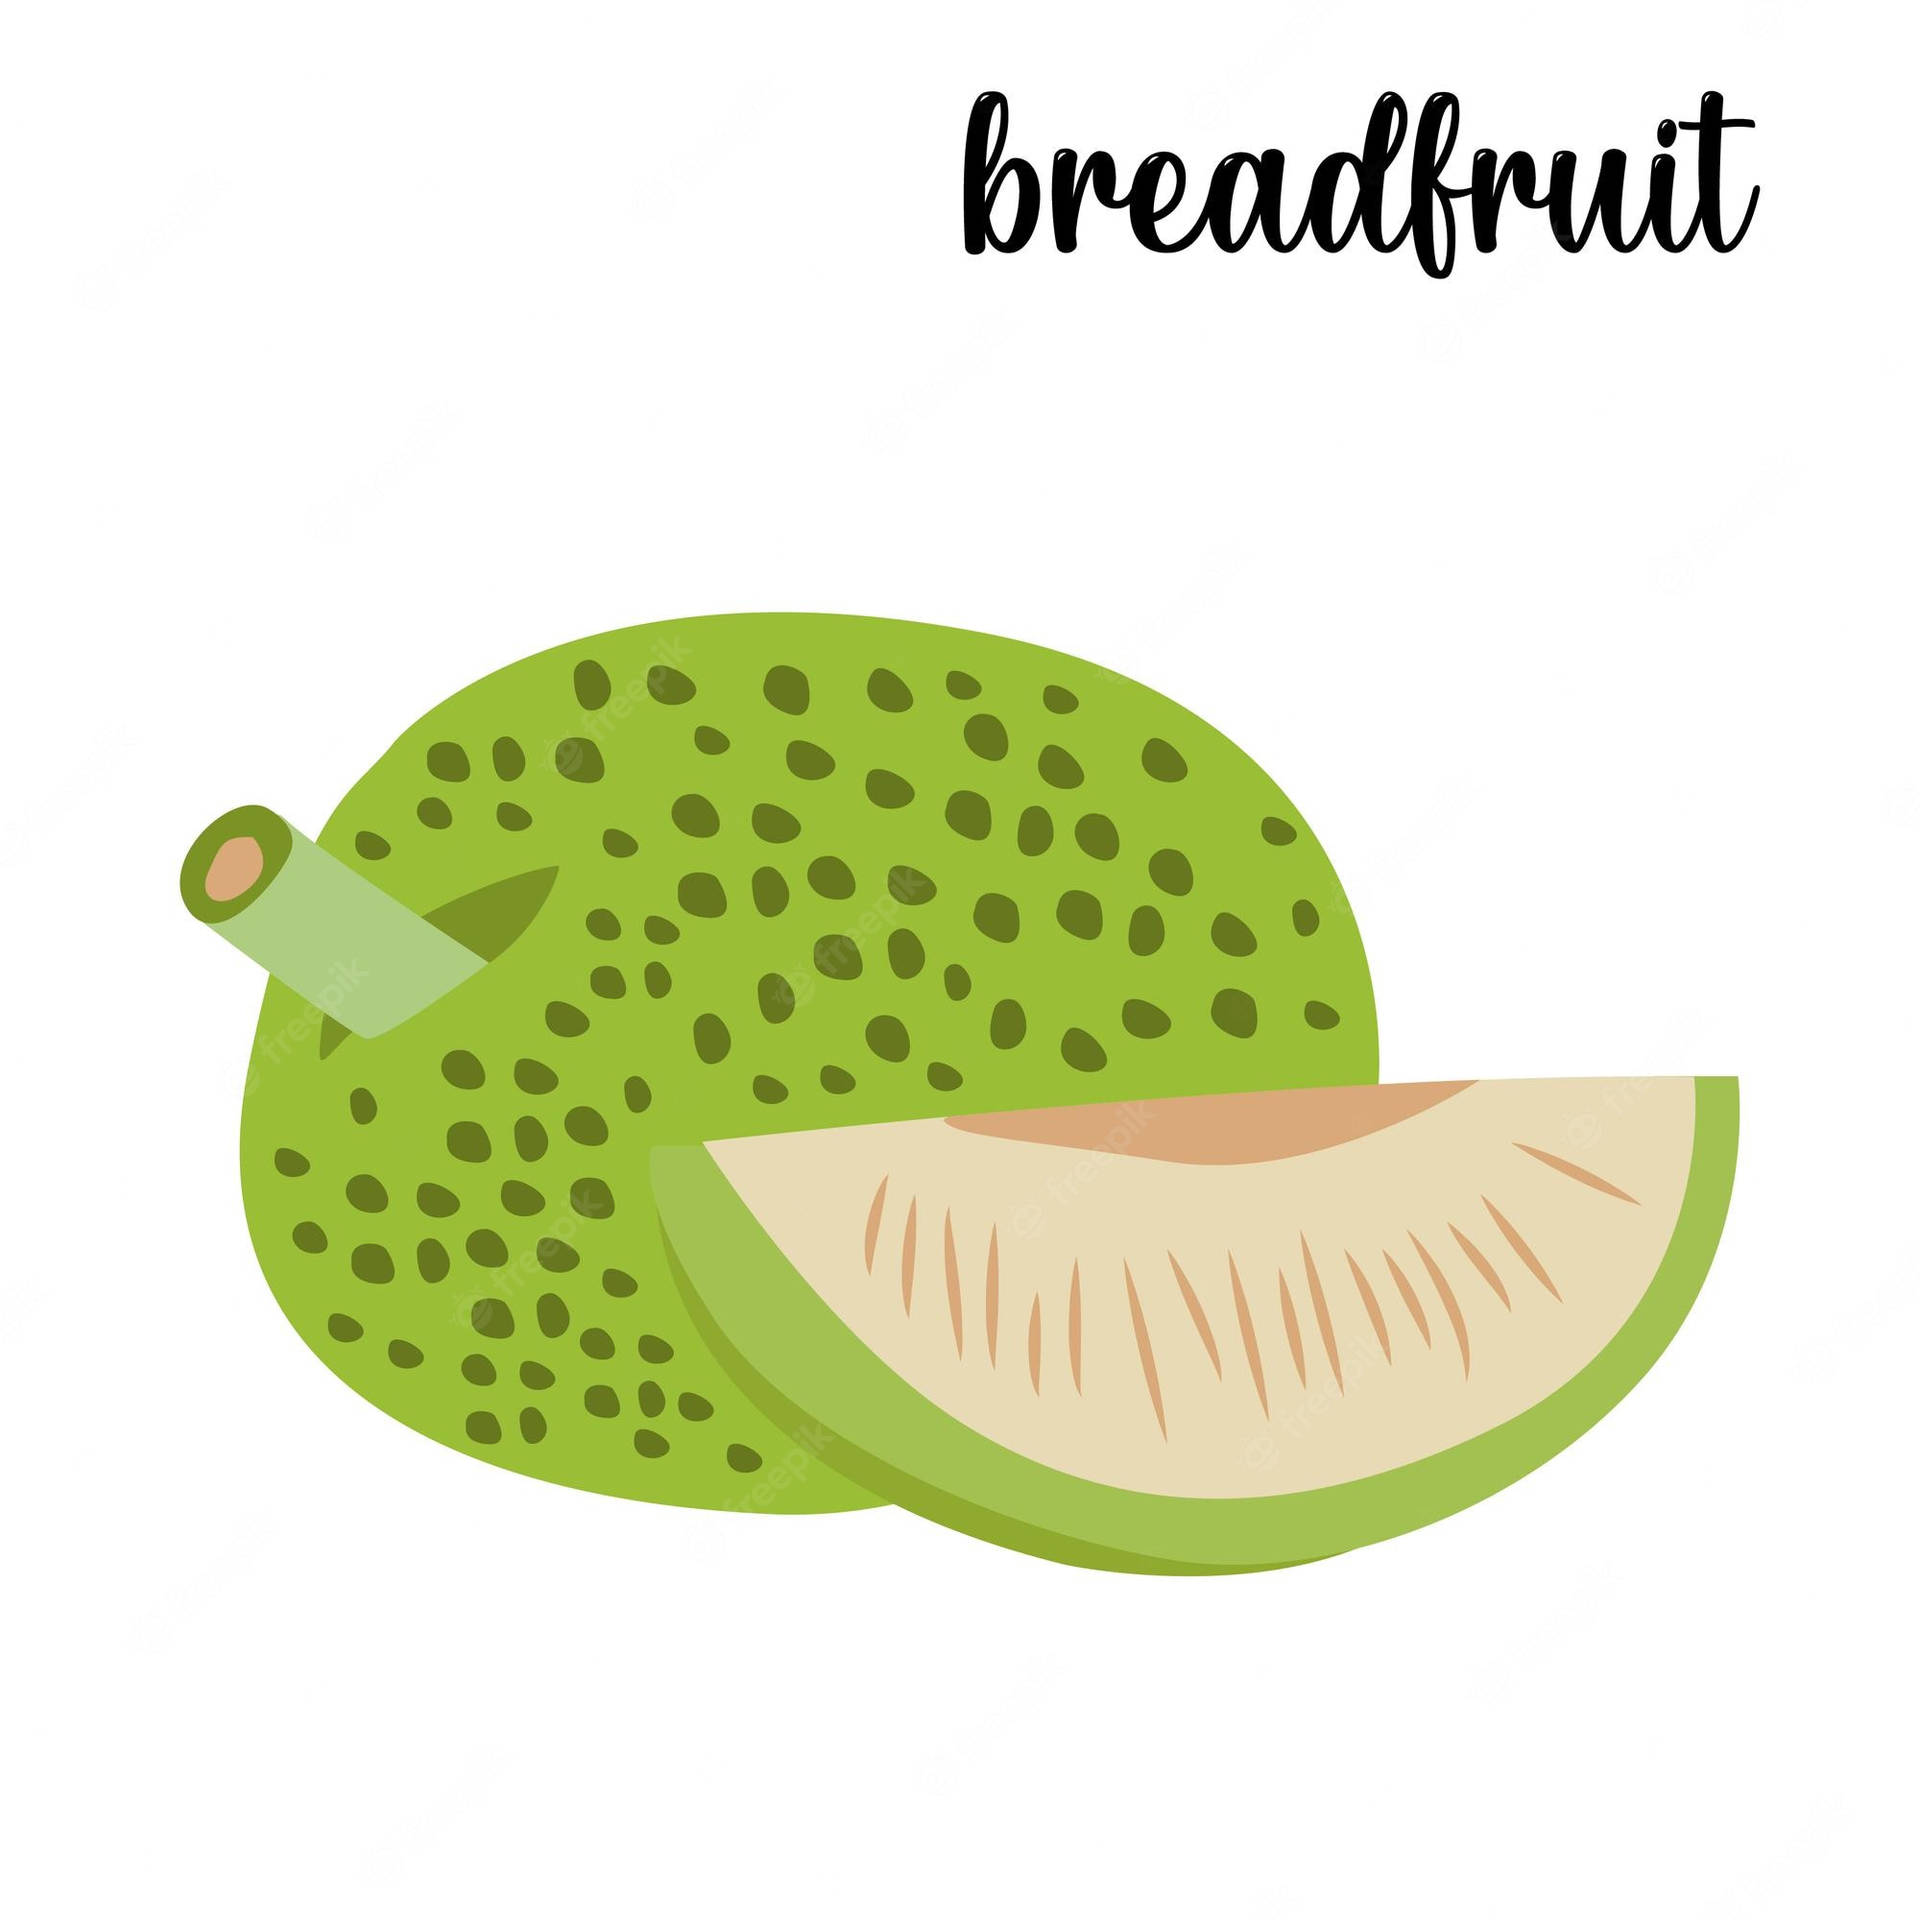 Breadfruit One Slice Animation Wallpaper